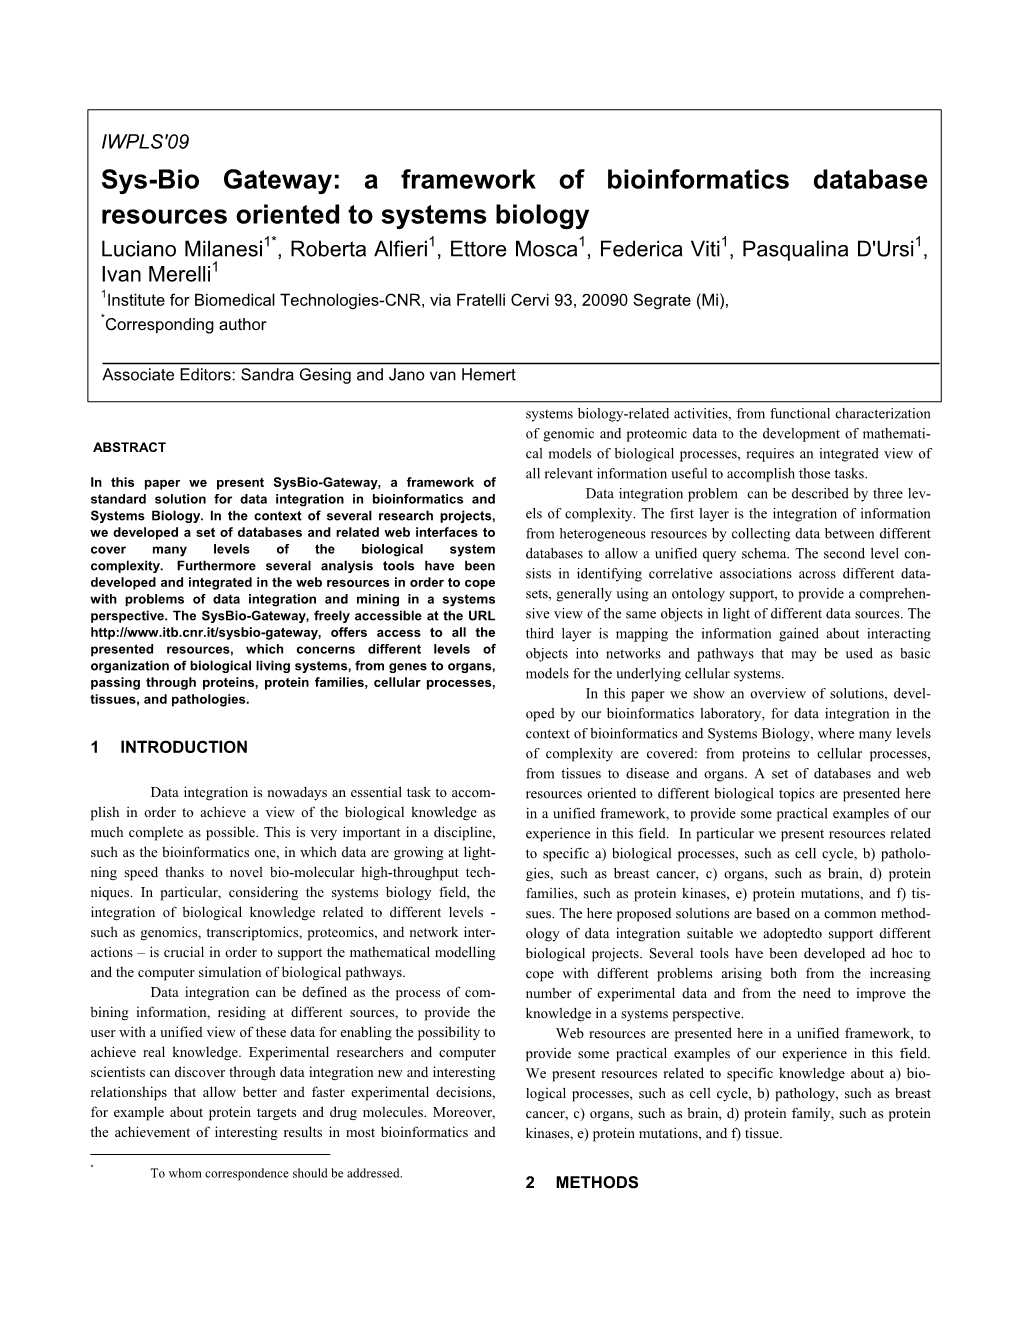 Sys-Bio Gateway: a Framework of Bioinformatics Database Resources